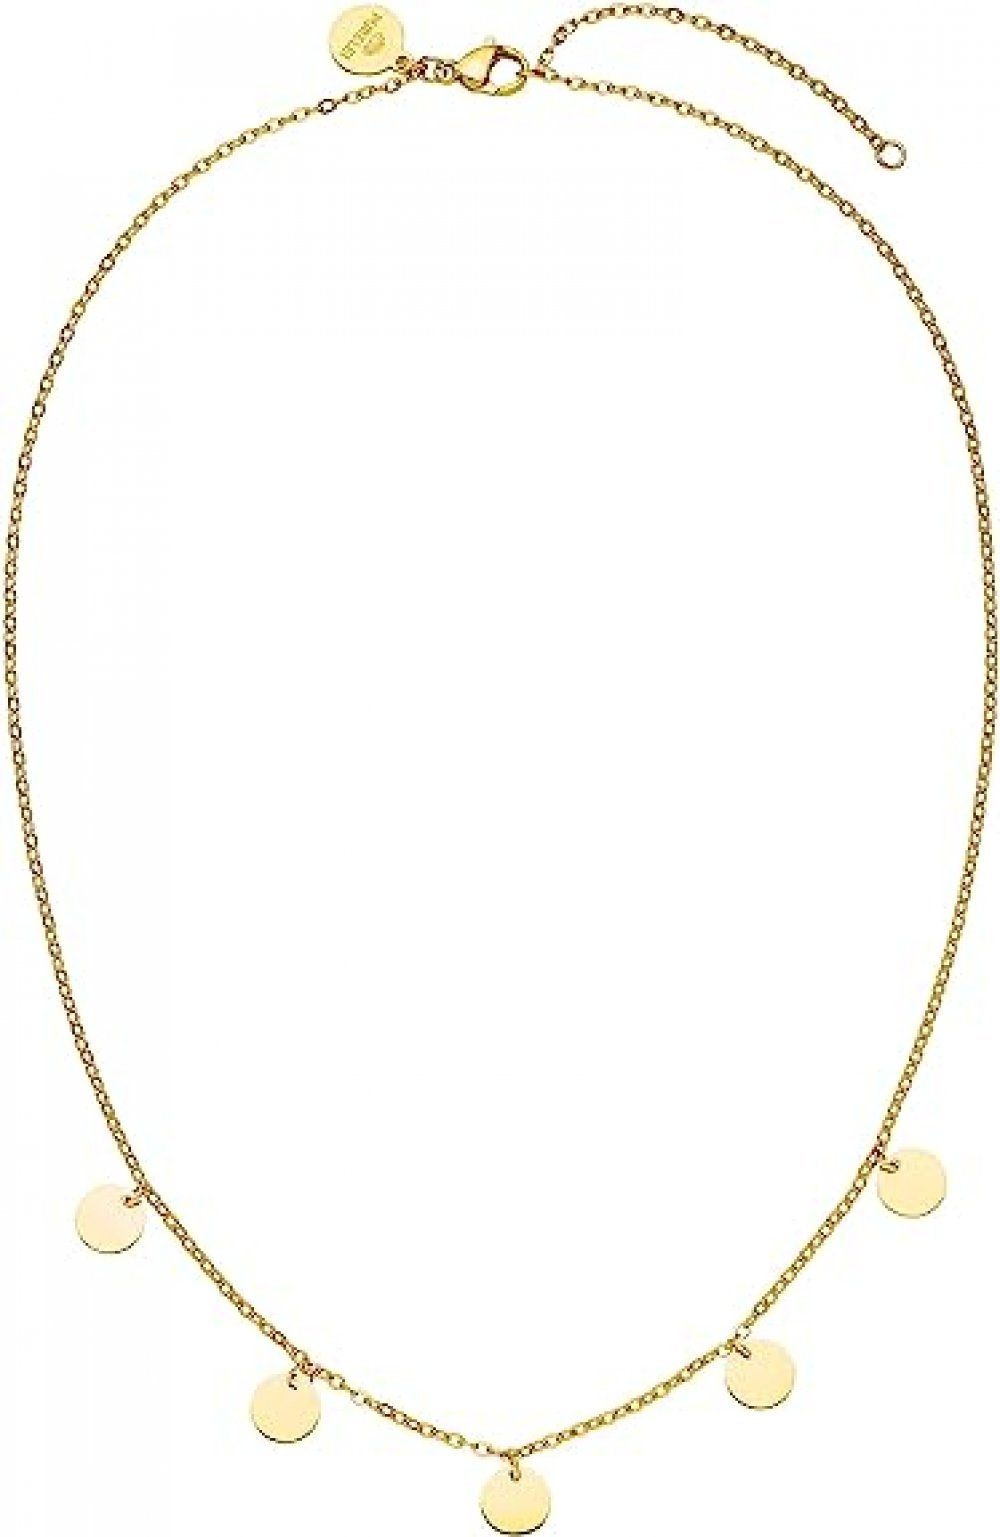 WaKuKa Charm-Kette Damen-Halskette, wasserfeste Kette aus 925er Silber golden